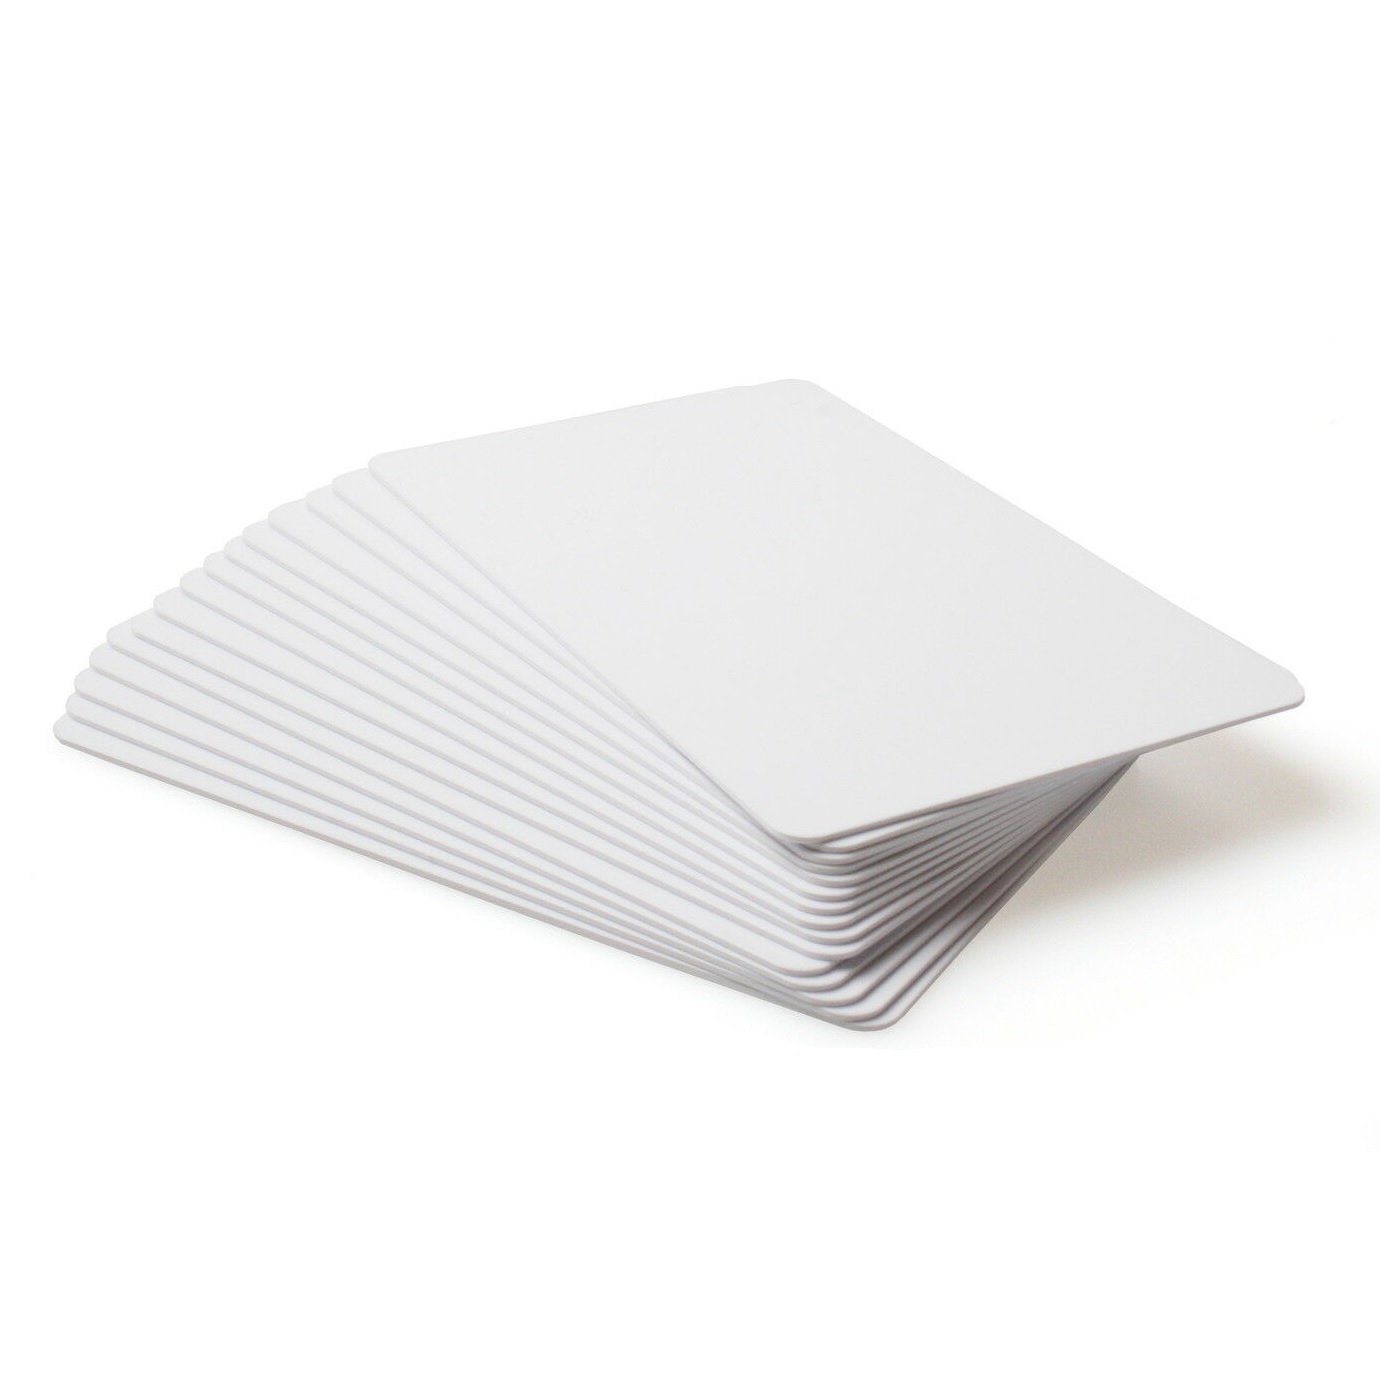 View 500 x 0.76mm Plain White Composite Card